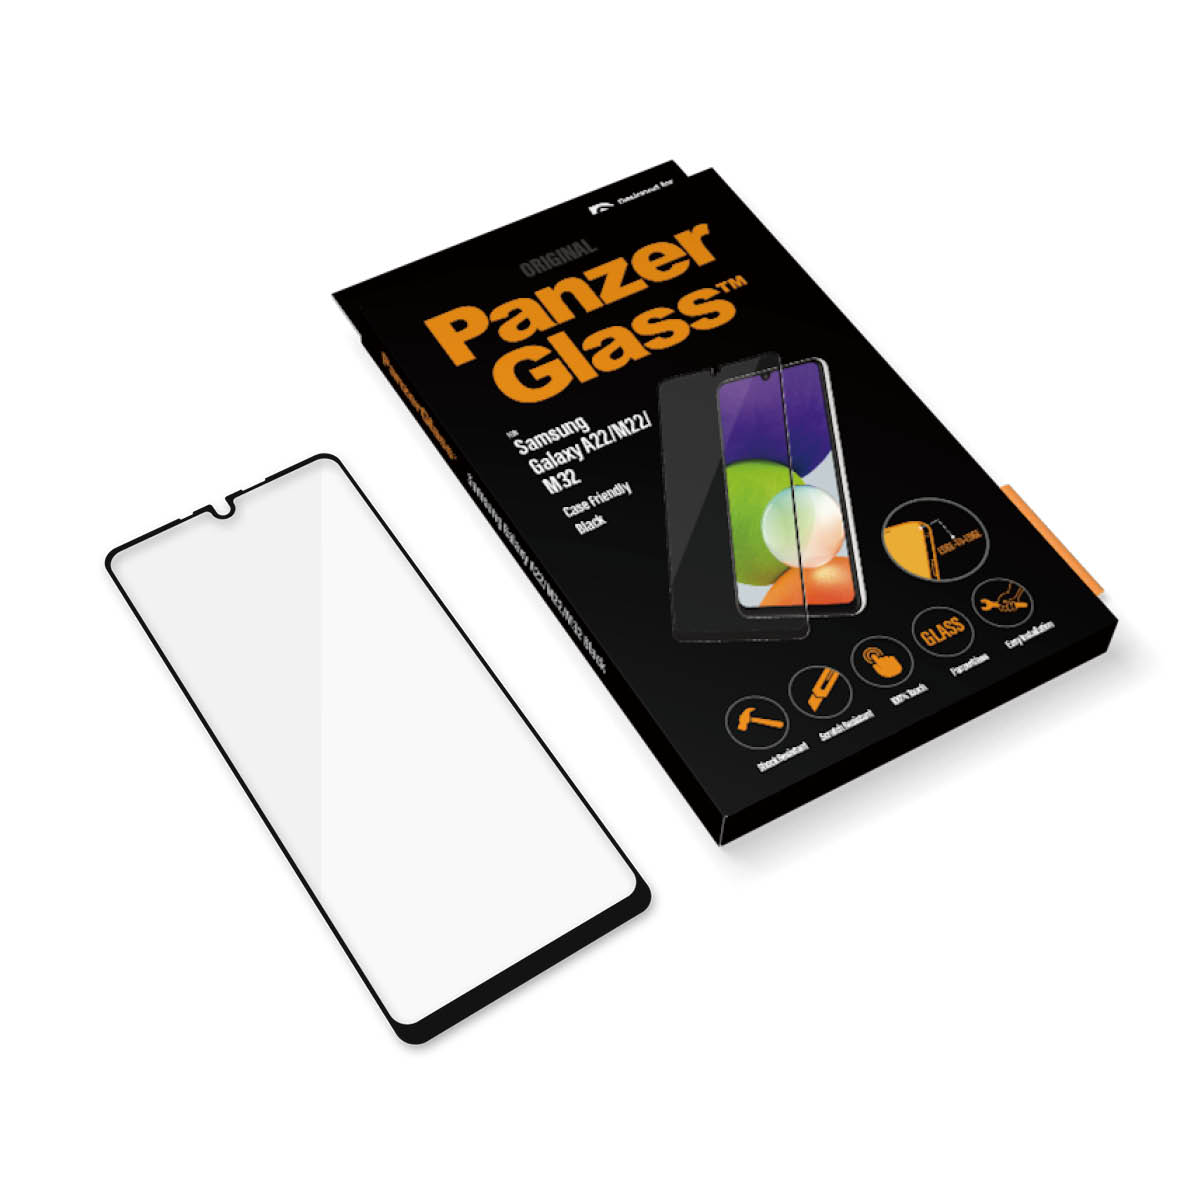 PanzerGlass Samsung Galaxy A22 | M22 | M32 | Sticla de protectie pentru ecran thumb